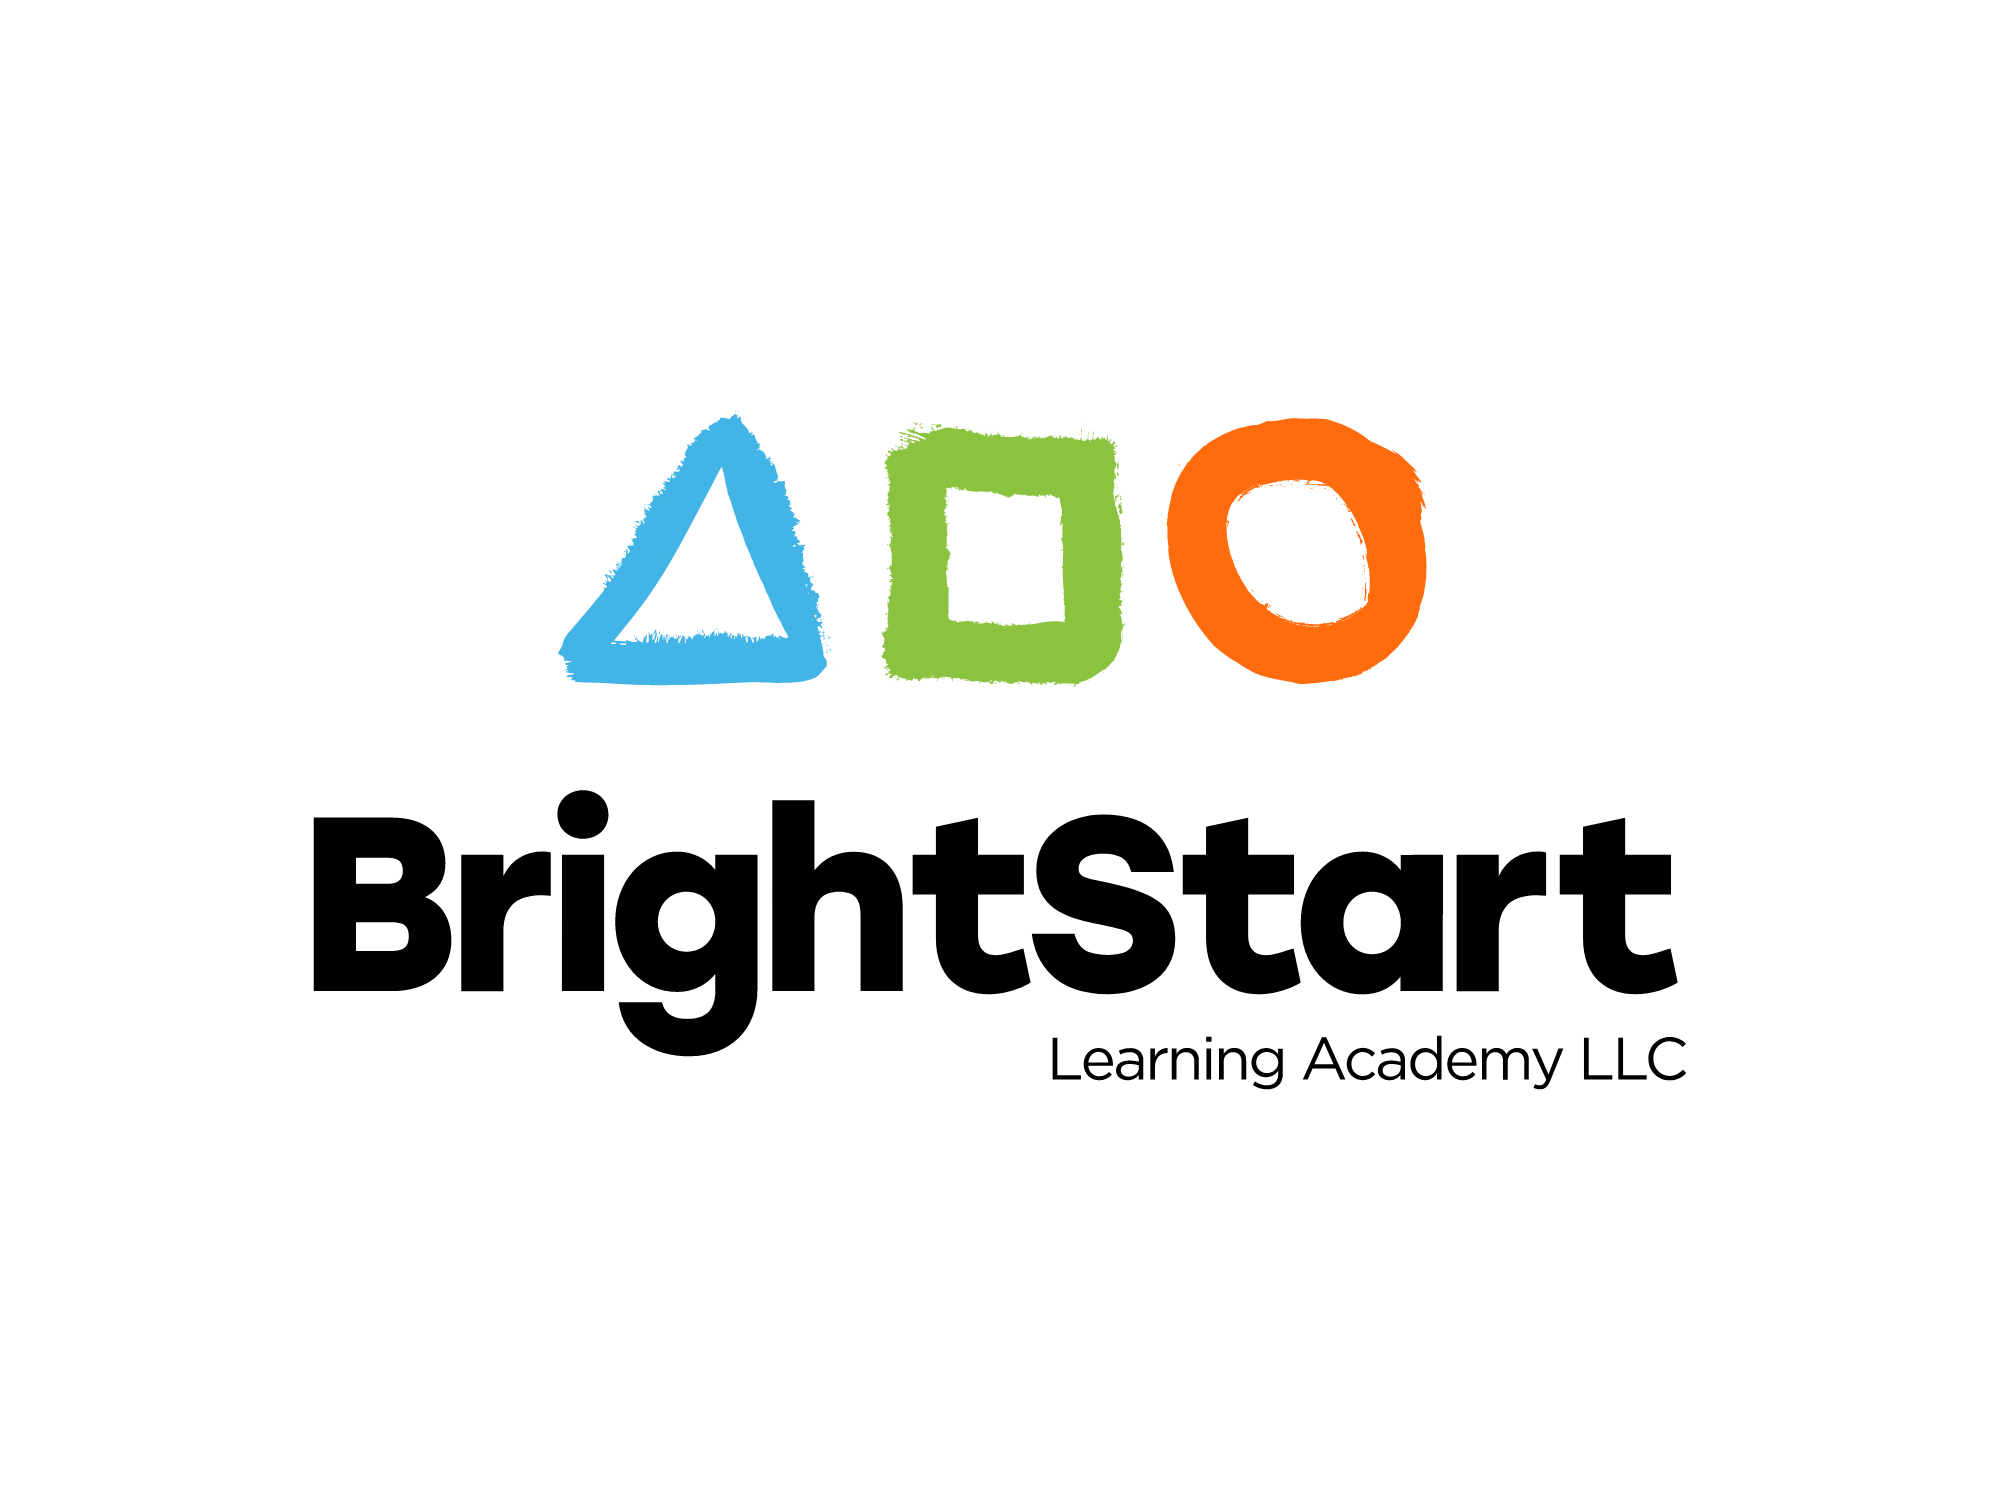 Brightstart Learning Academy LLC